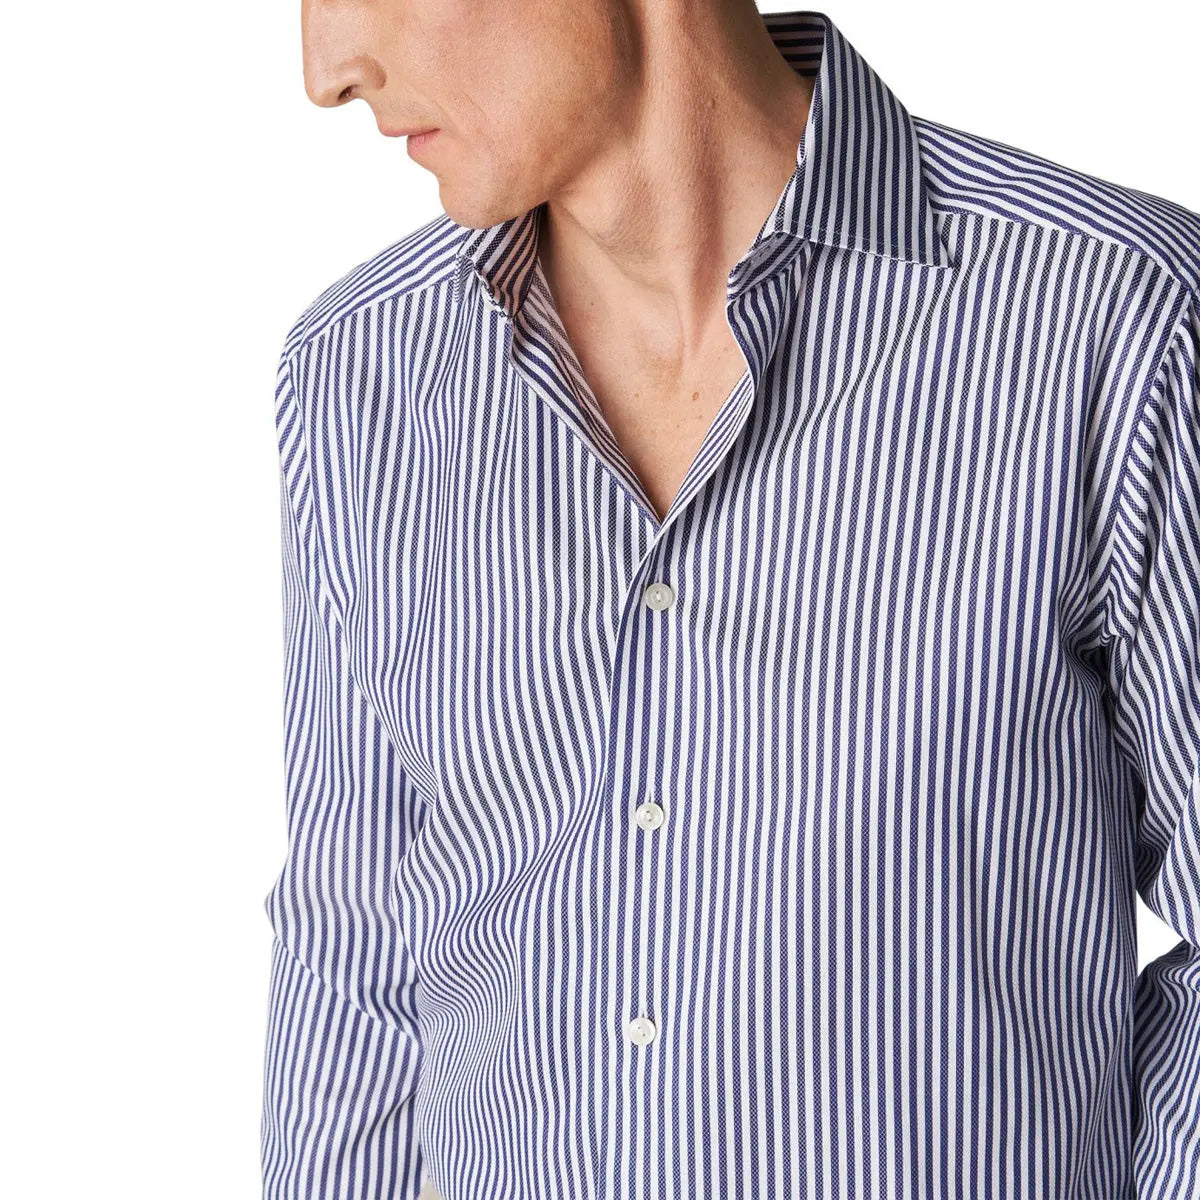 Dark Blue Bengal Stripe Contemporary Fit Shirt  Eton   